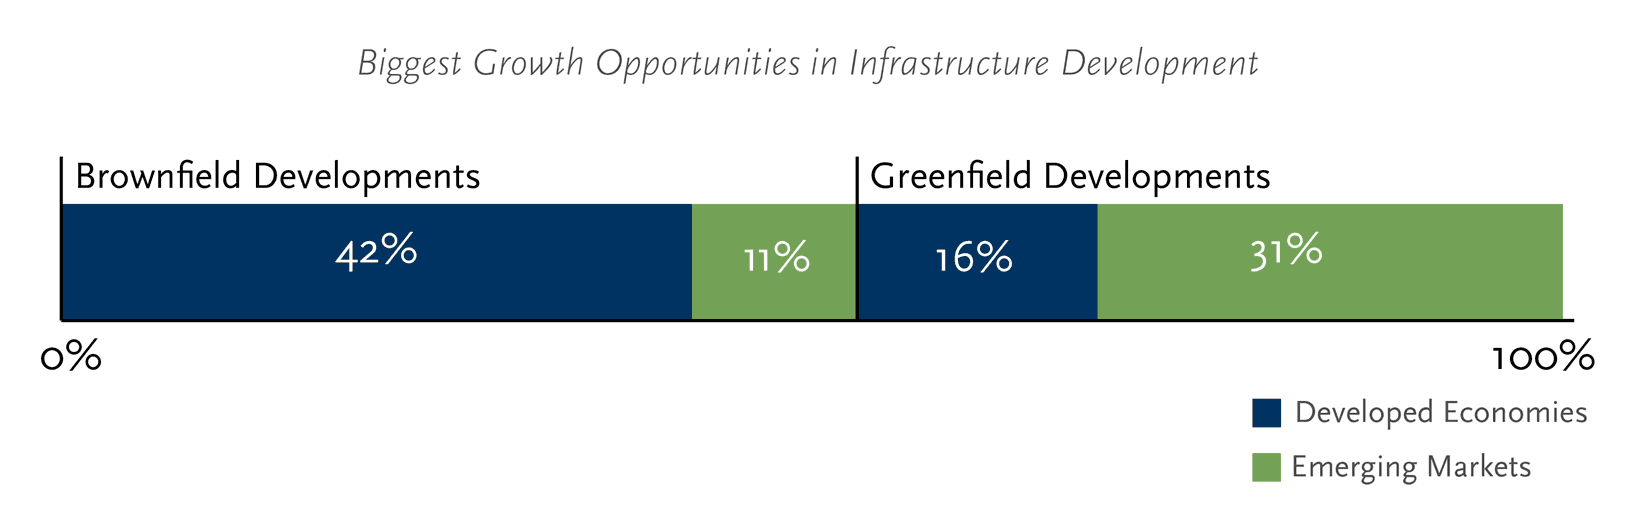 Biggest Growth Opportunities in Infrastructure Development